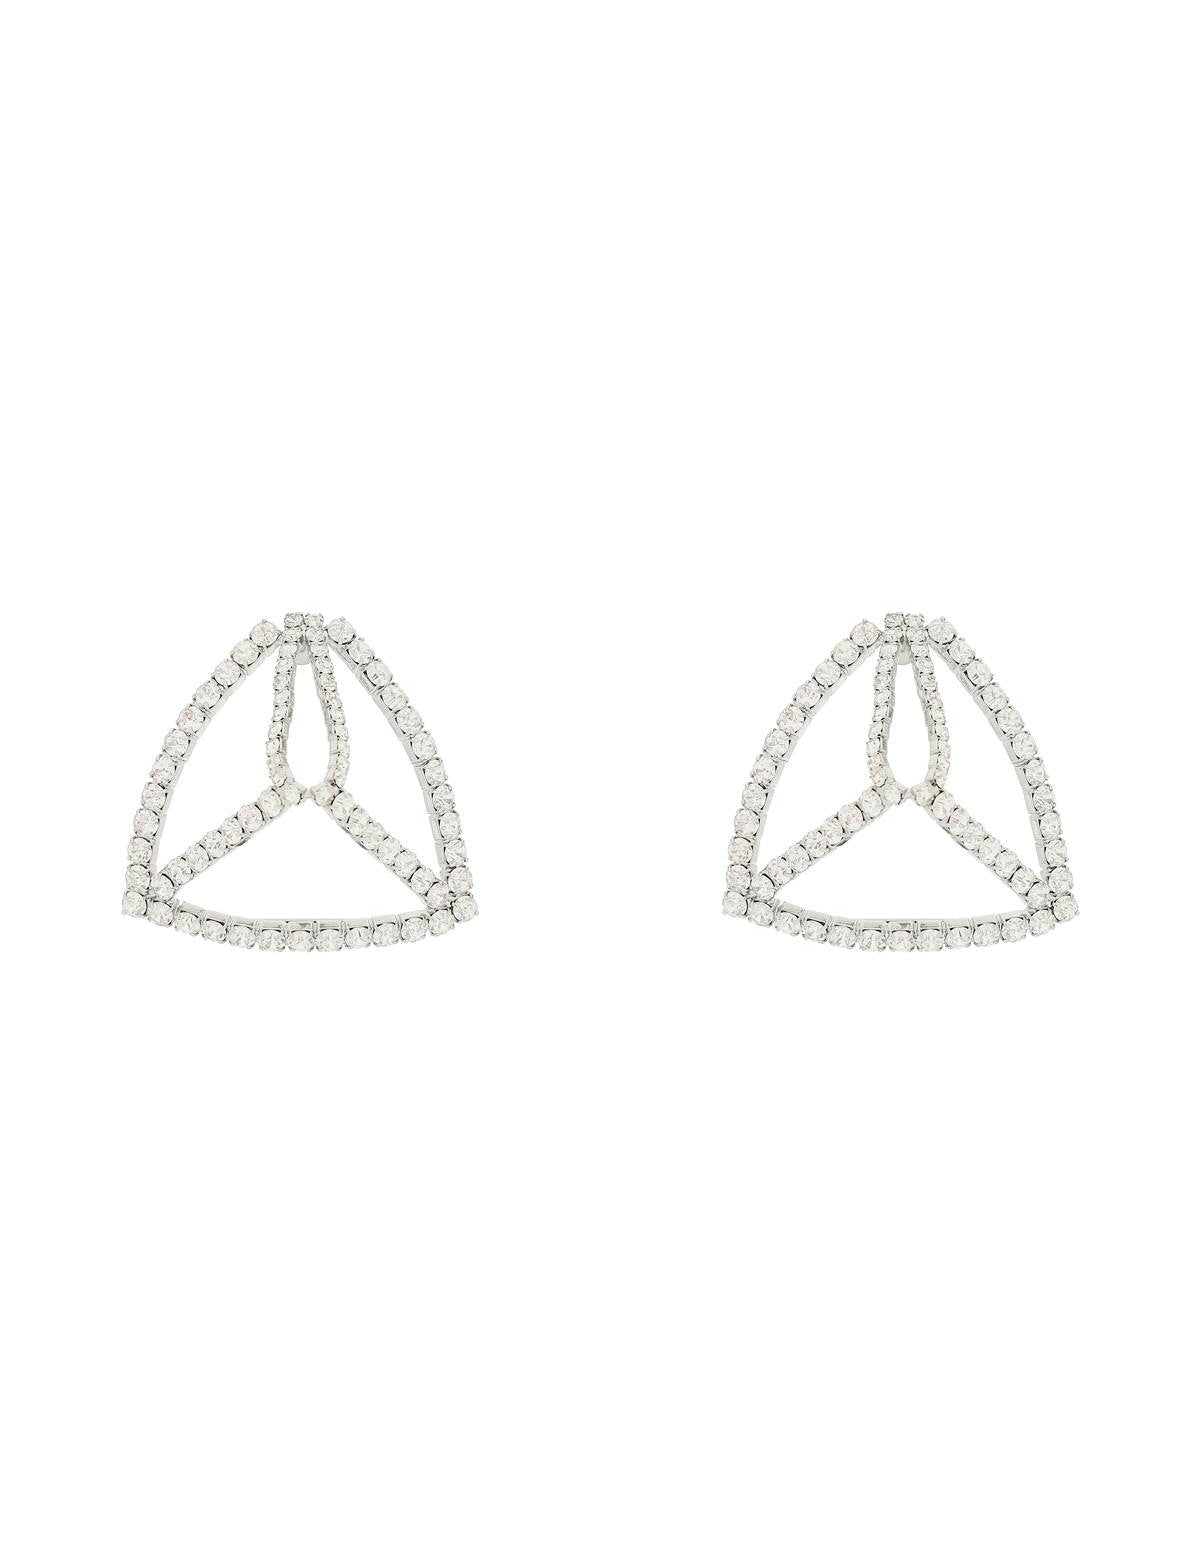 area-crystal-pyramid-earrings.jpg